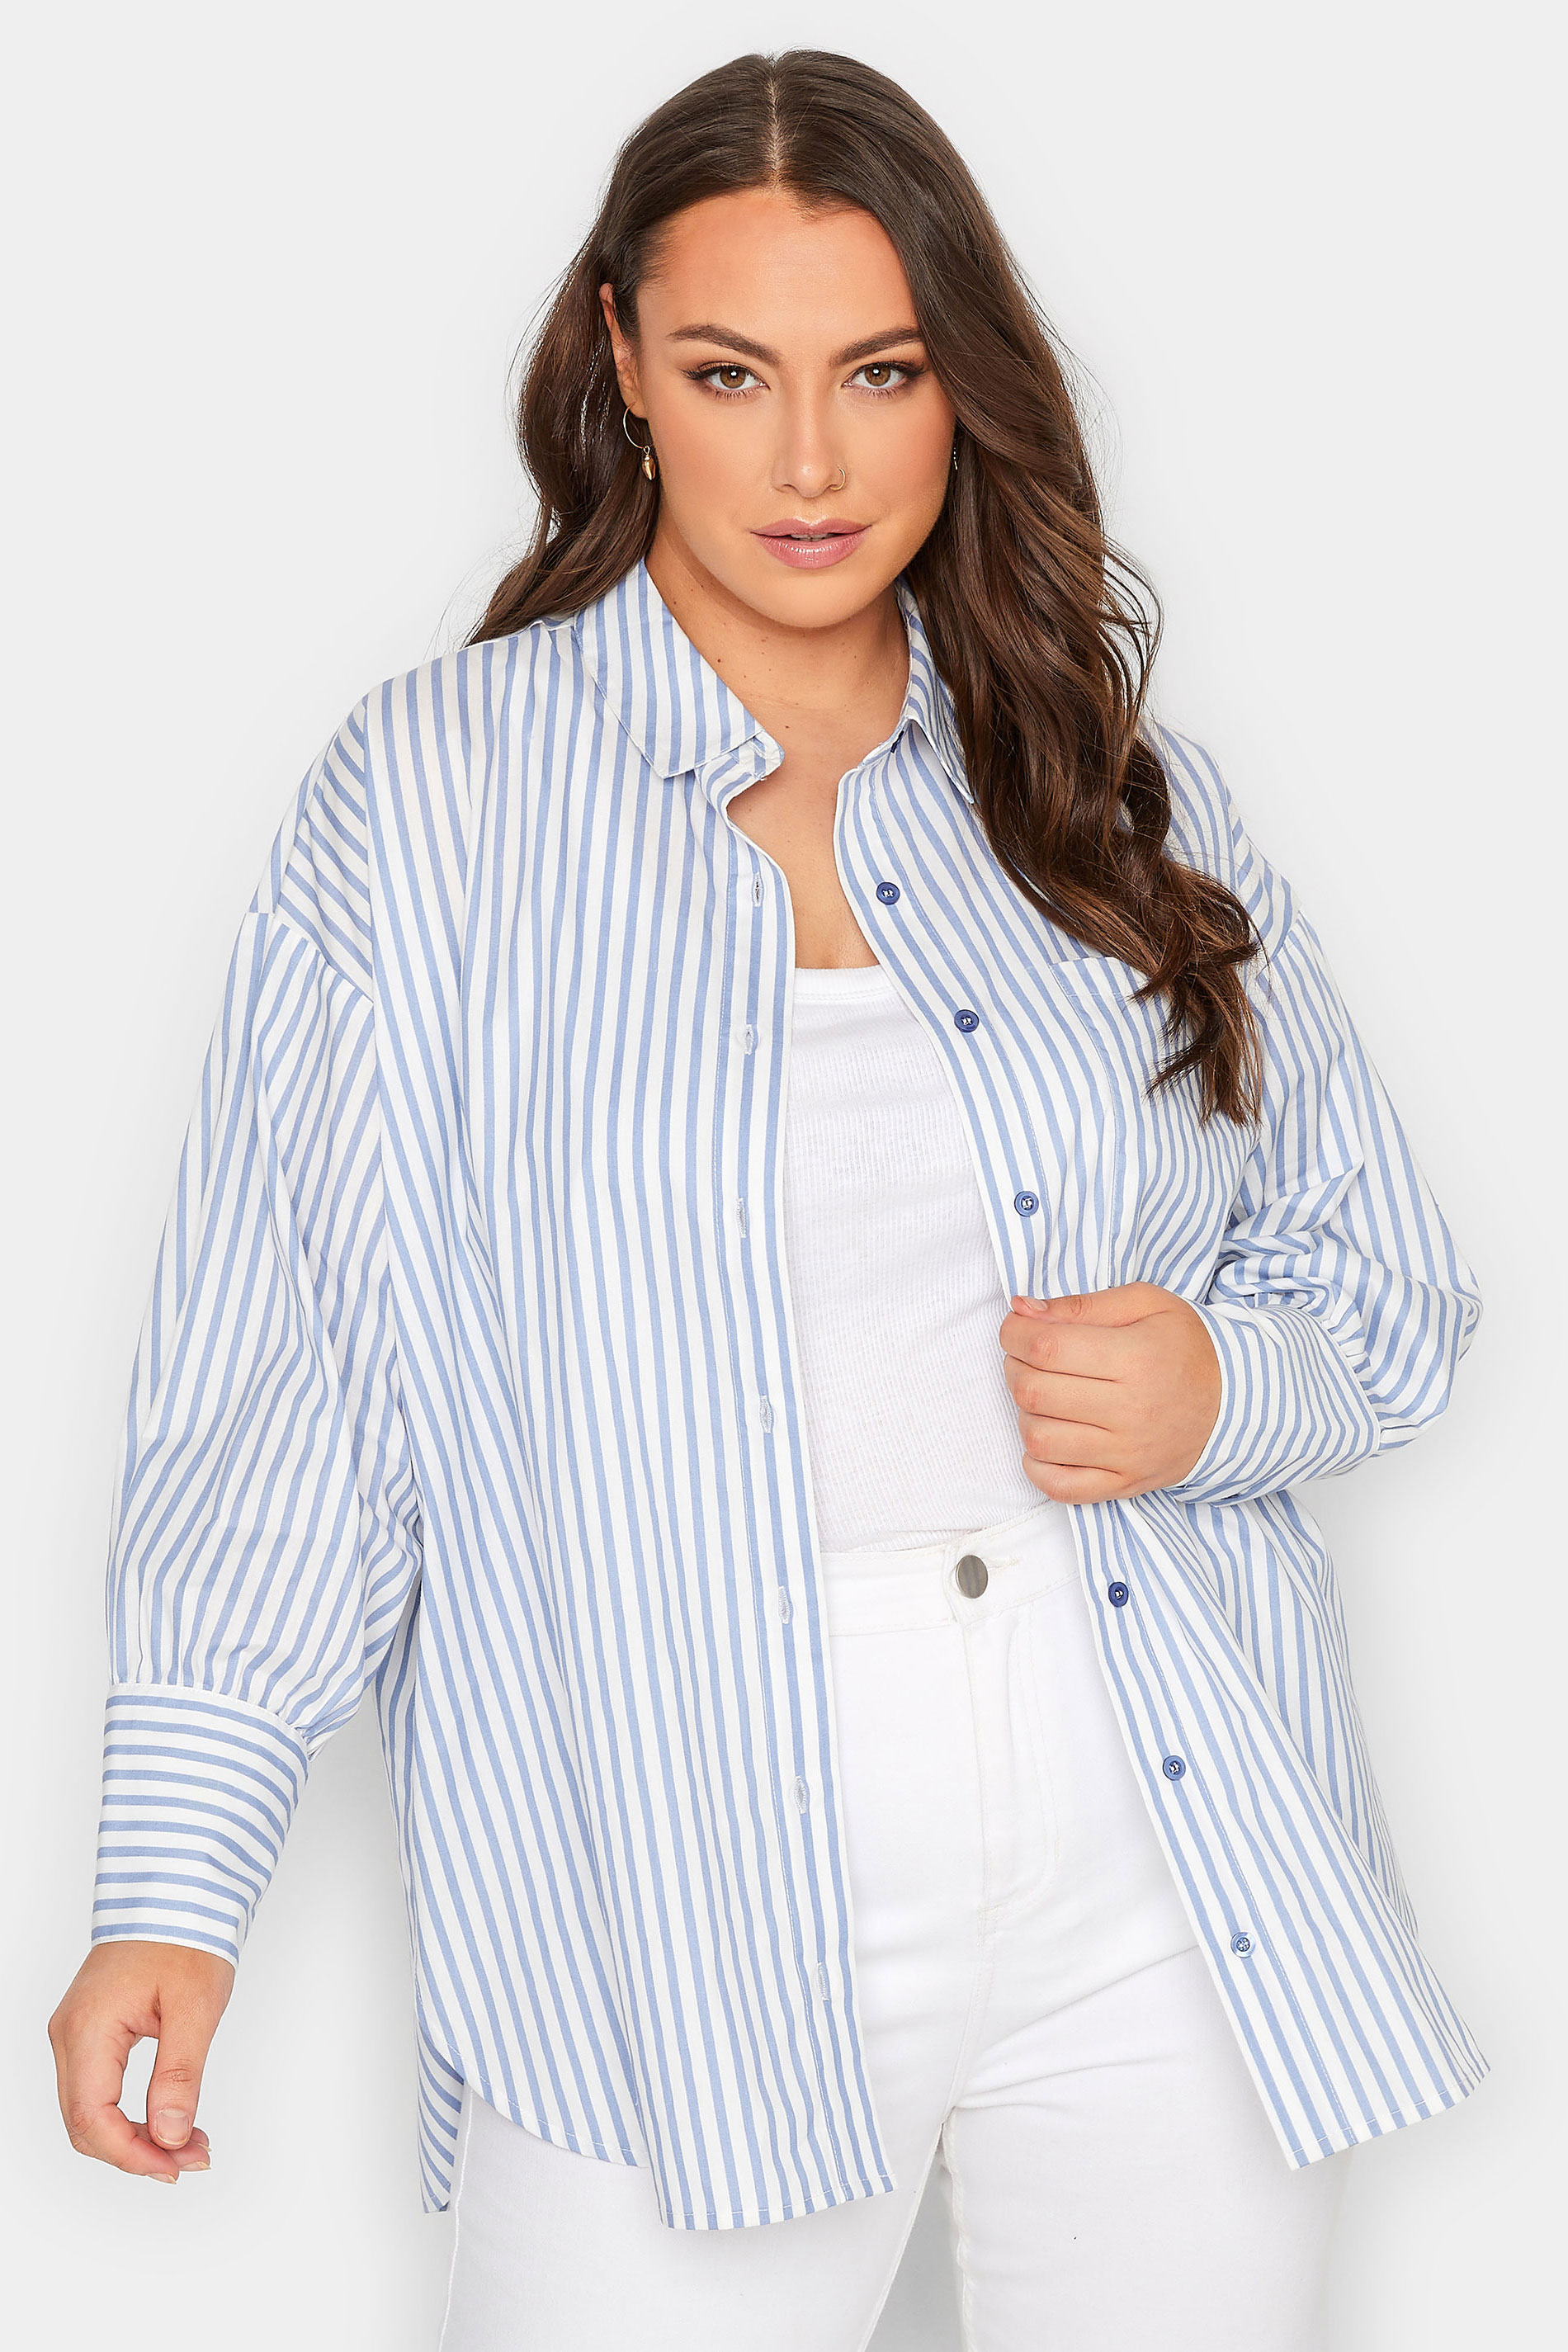 YOURS Plus Size Blue & White Stripe Oversized Shirt | Yours Clothing  1